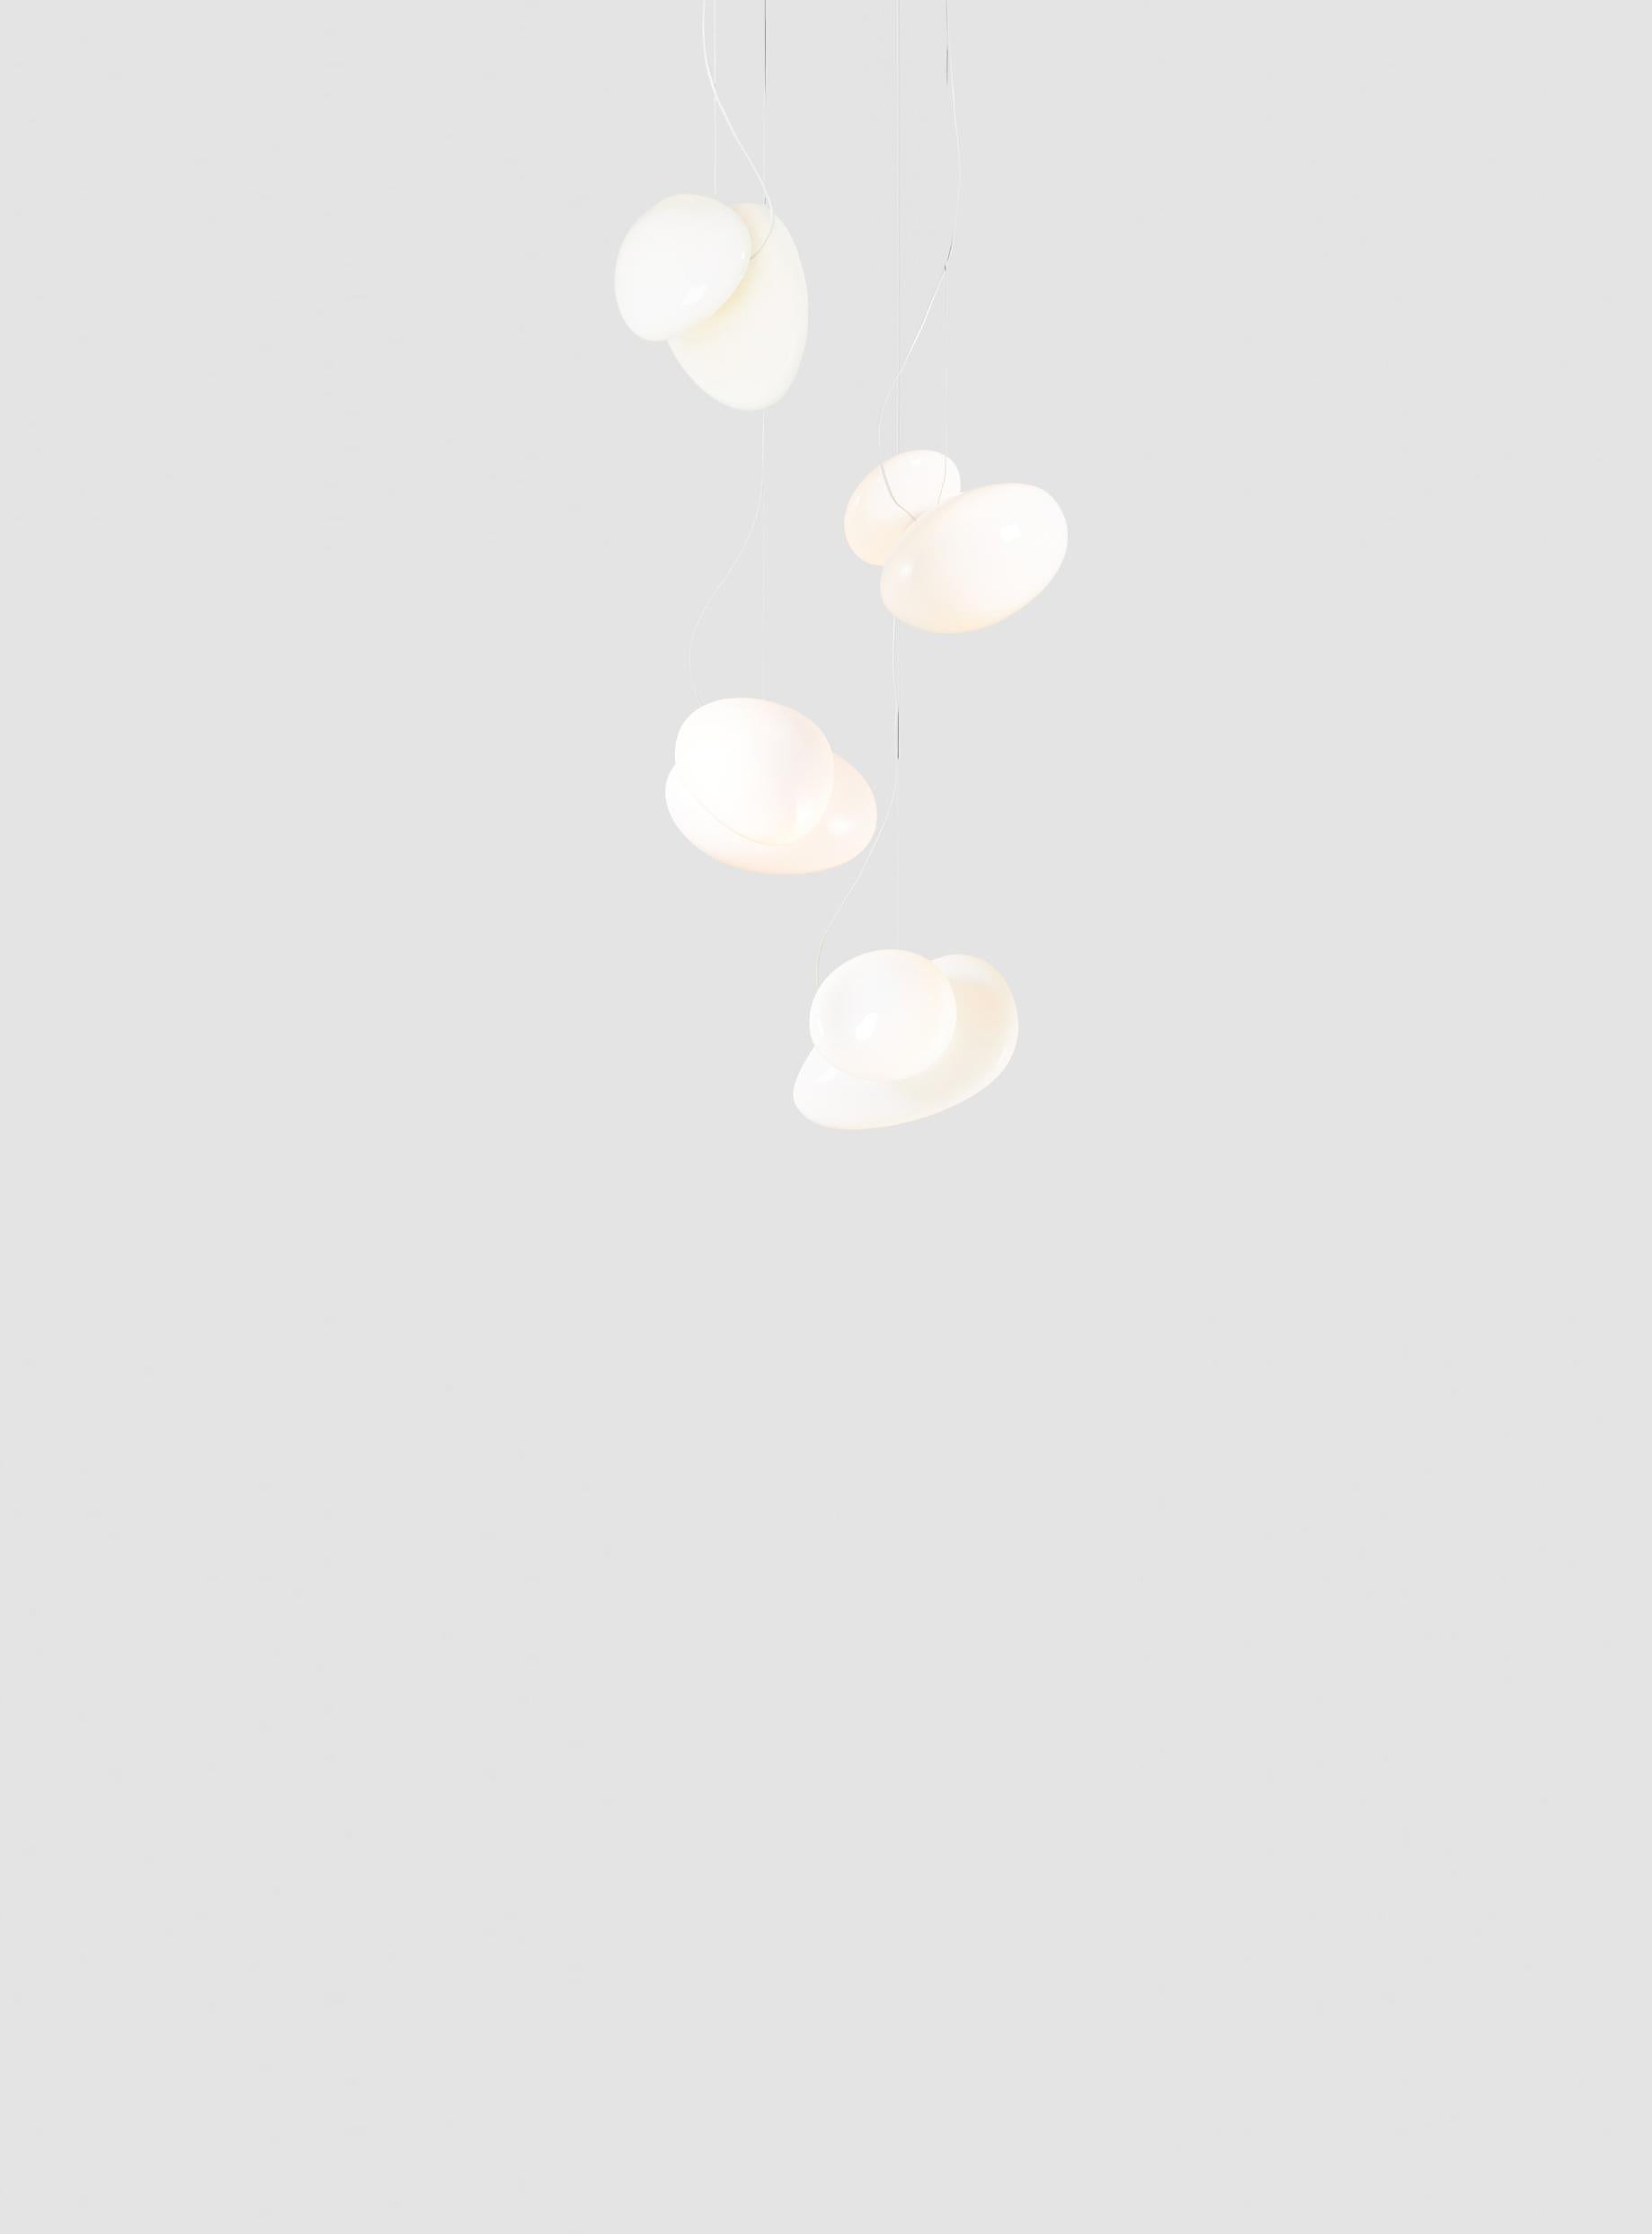 Contemporary chandelier Pebble 
Drop type: Cluster 

Electrical : 
Voltage: 110 – 277V / 220 – 240V
Integral LED source : 3 x 14W LED 39V

The model shown in picture:
Each pendant: Ø 35cm, 5kg
Canopy: Ø 69cm, 11kg
Color: white pearl